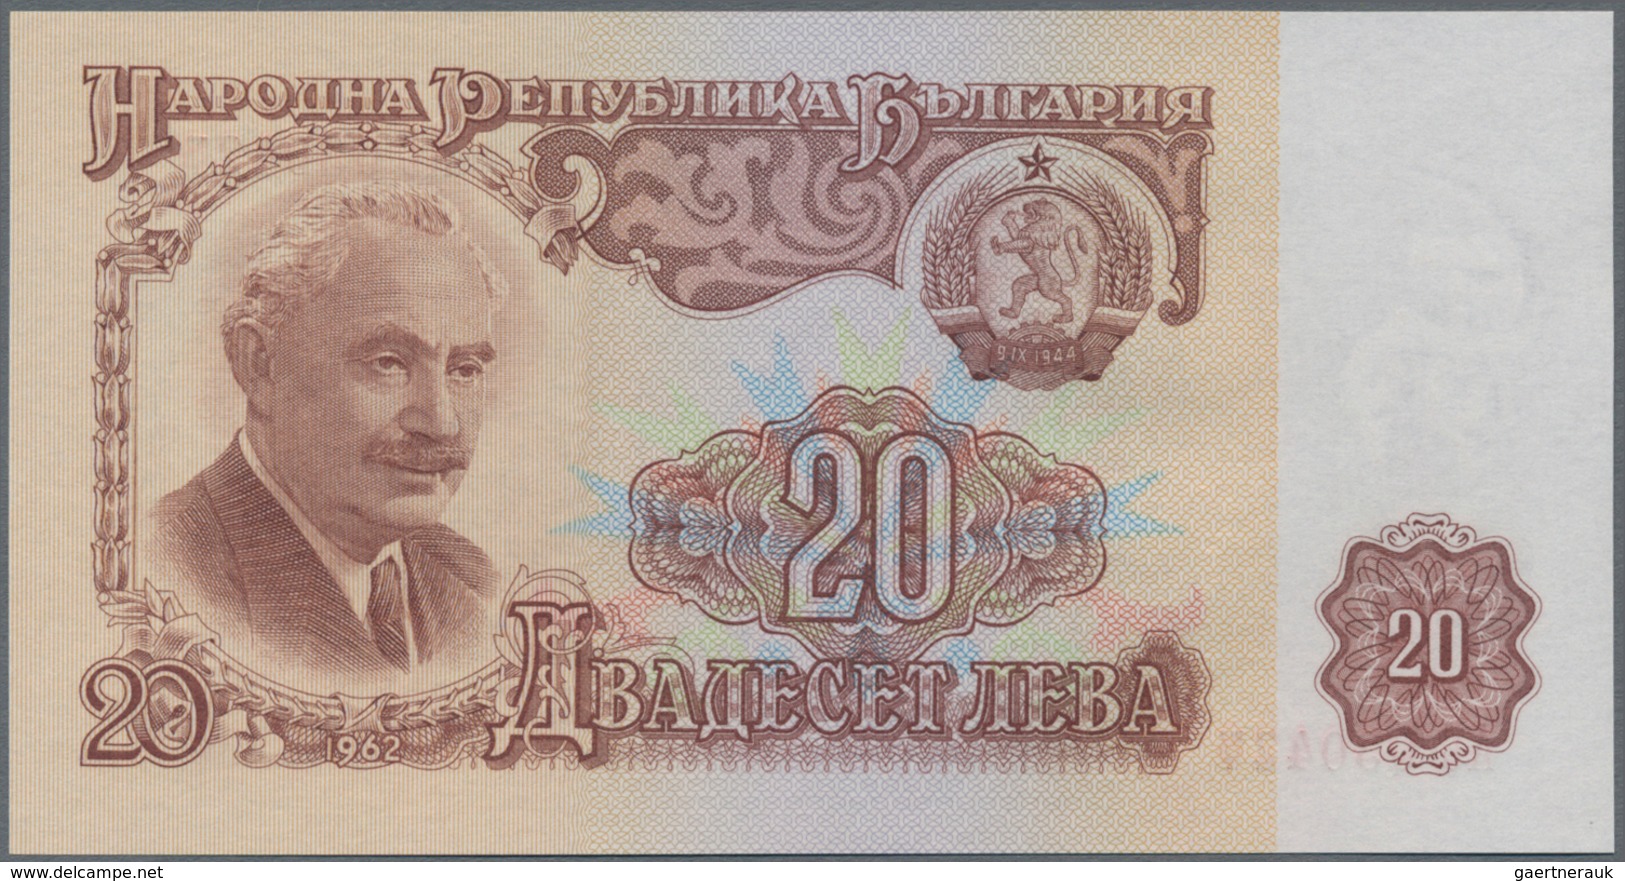 Bulgaria / Bulgarien: Set with 11 banknotes series 1962 – 1990, containing 1-20 Leva 1962 P.88-92 (U